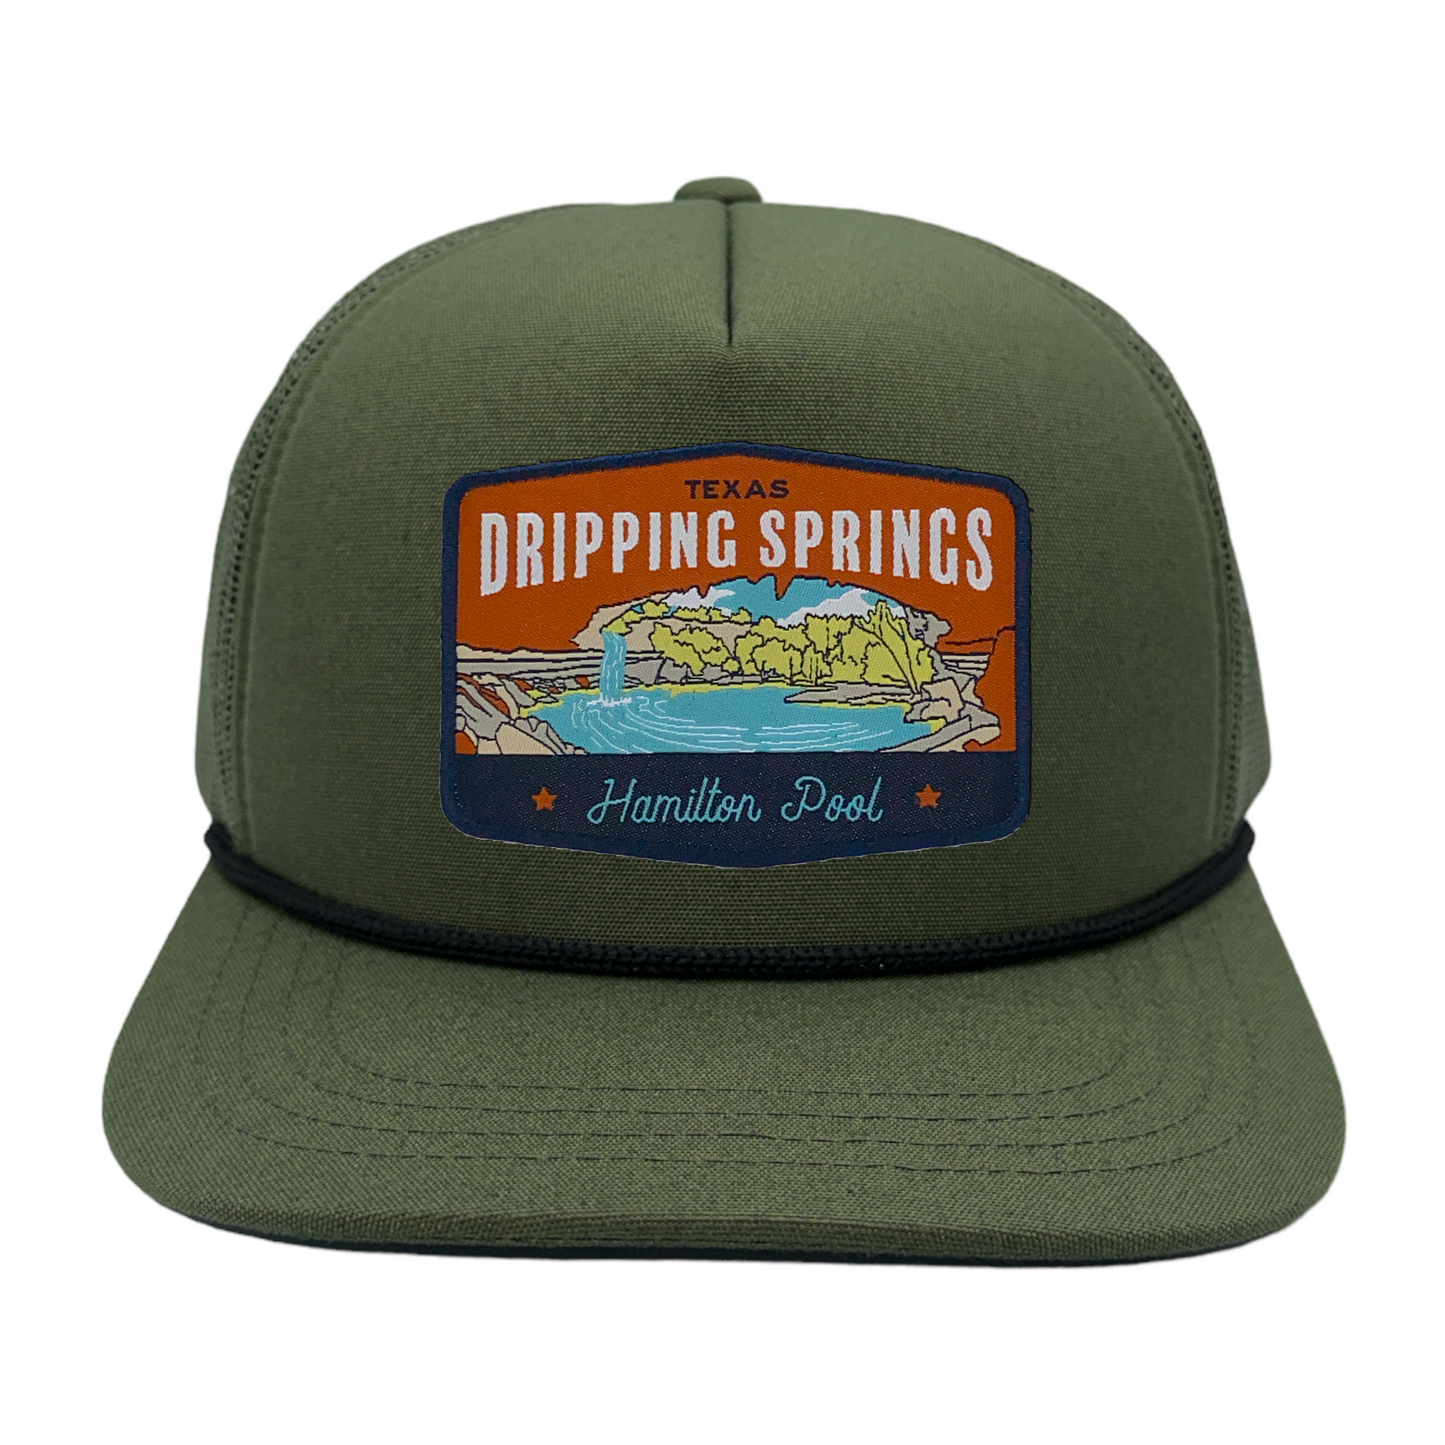 Dripping Springs, TX Trucker